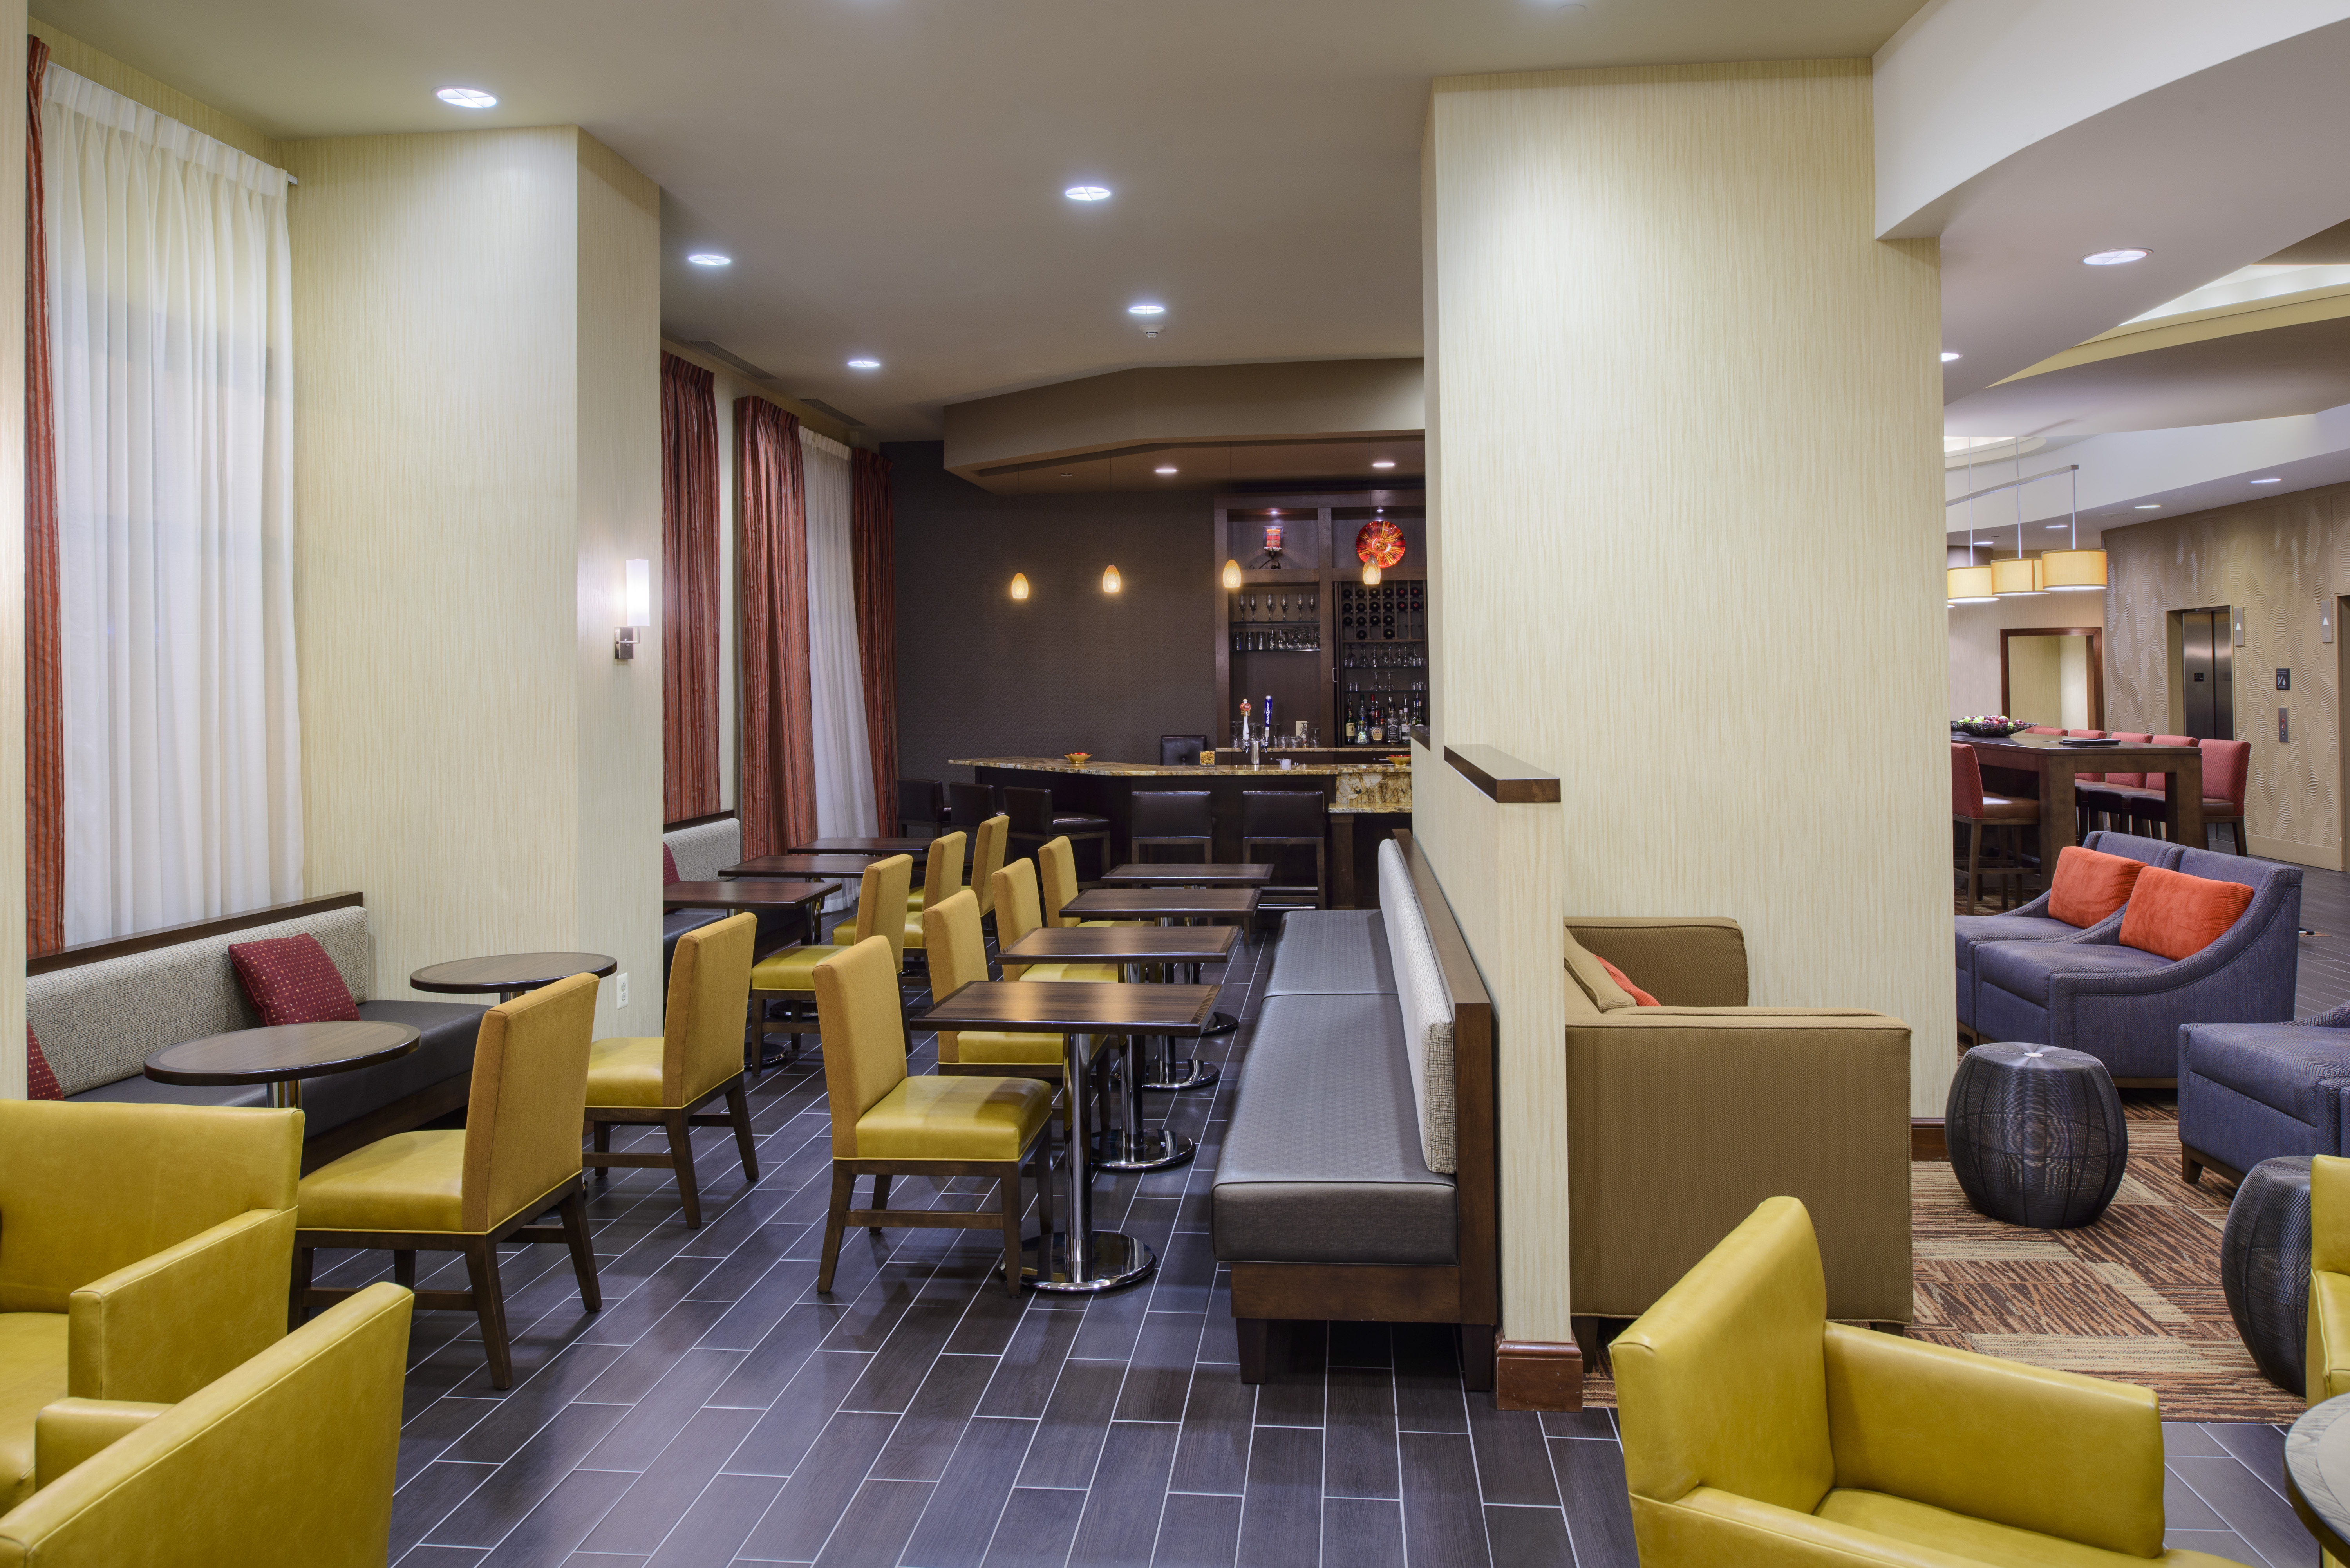 Lobby Bar and Lounge